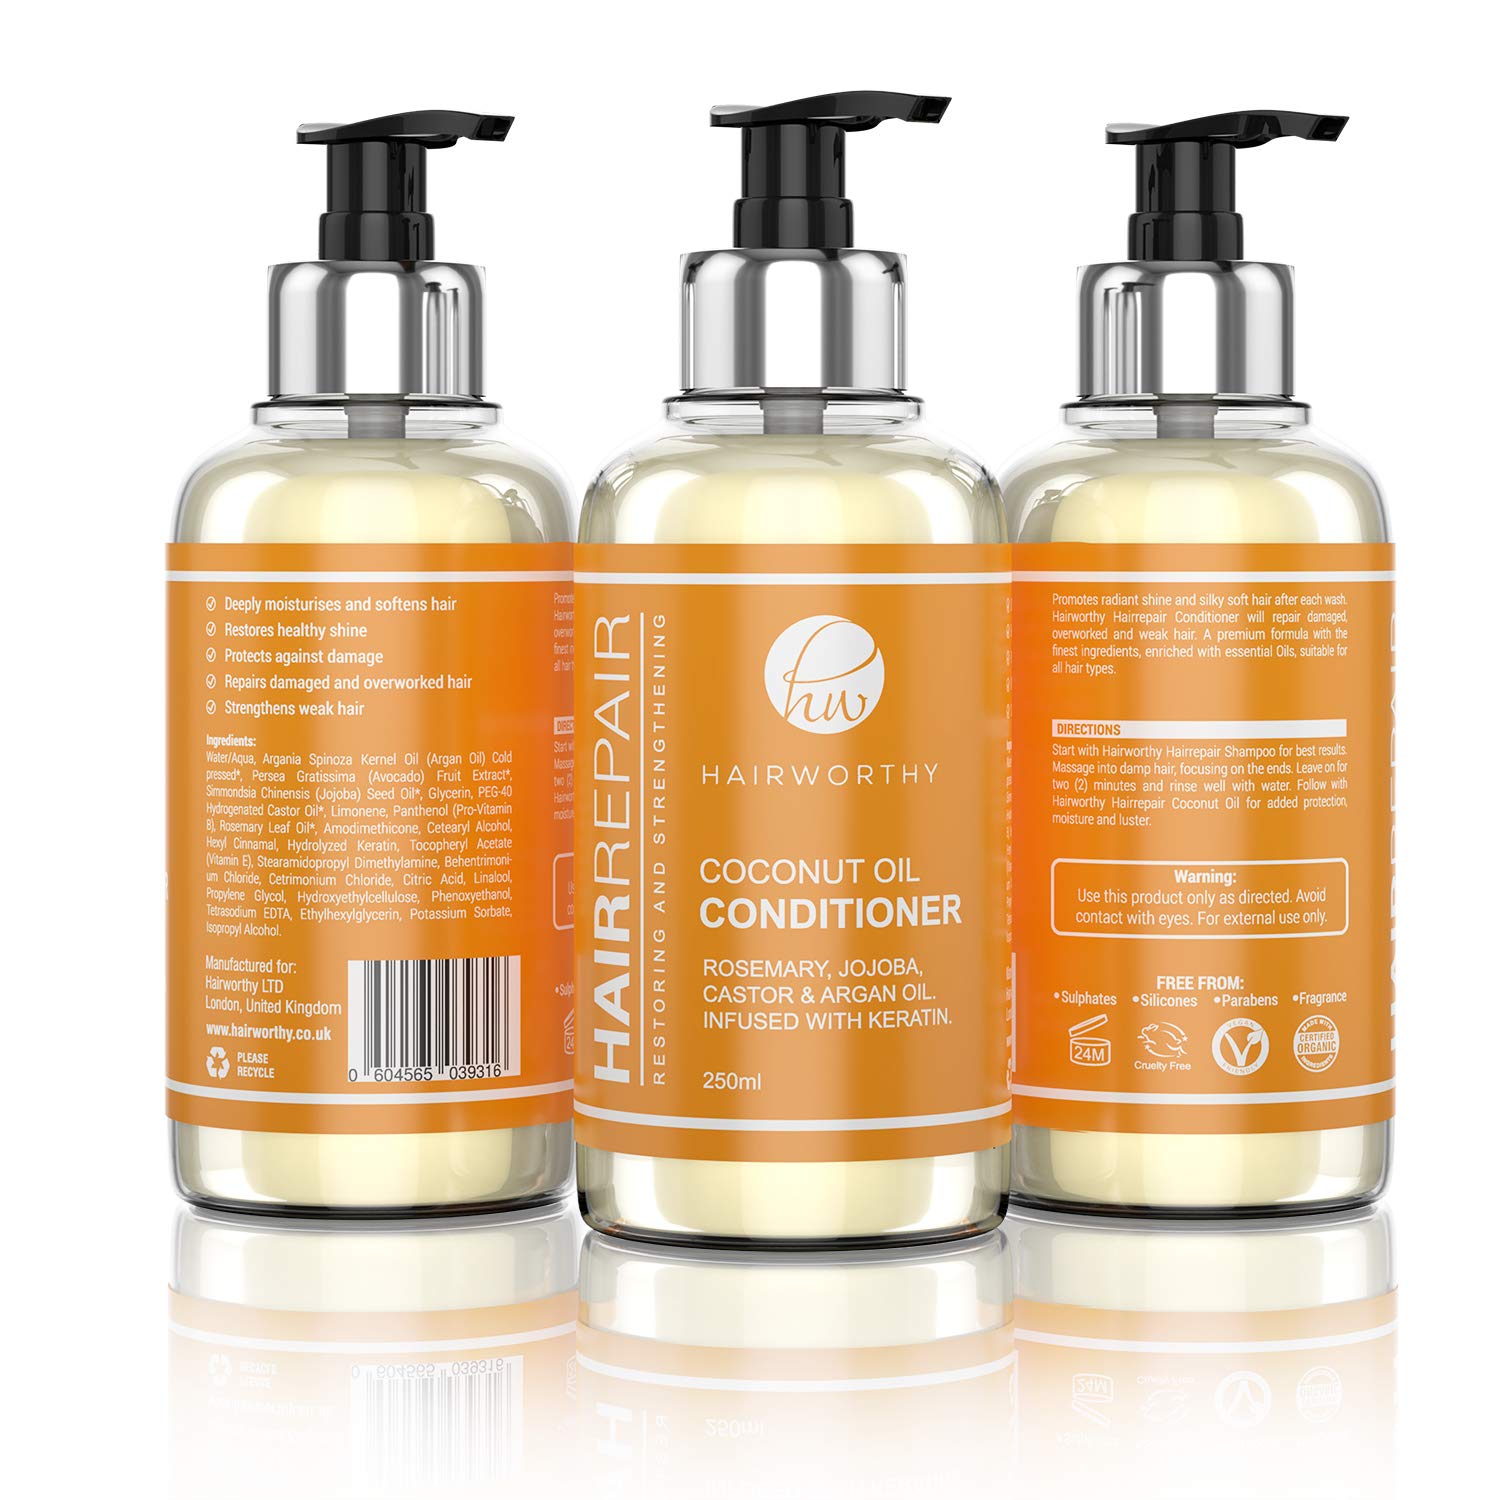 Hairworthy Hairrepair Coconut Oil Conditioner - ROSEMARY, JOJOBA, CASTOR & ARGAN OIL. INFUSED WITH KERATIN.